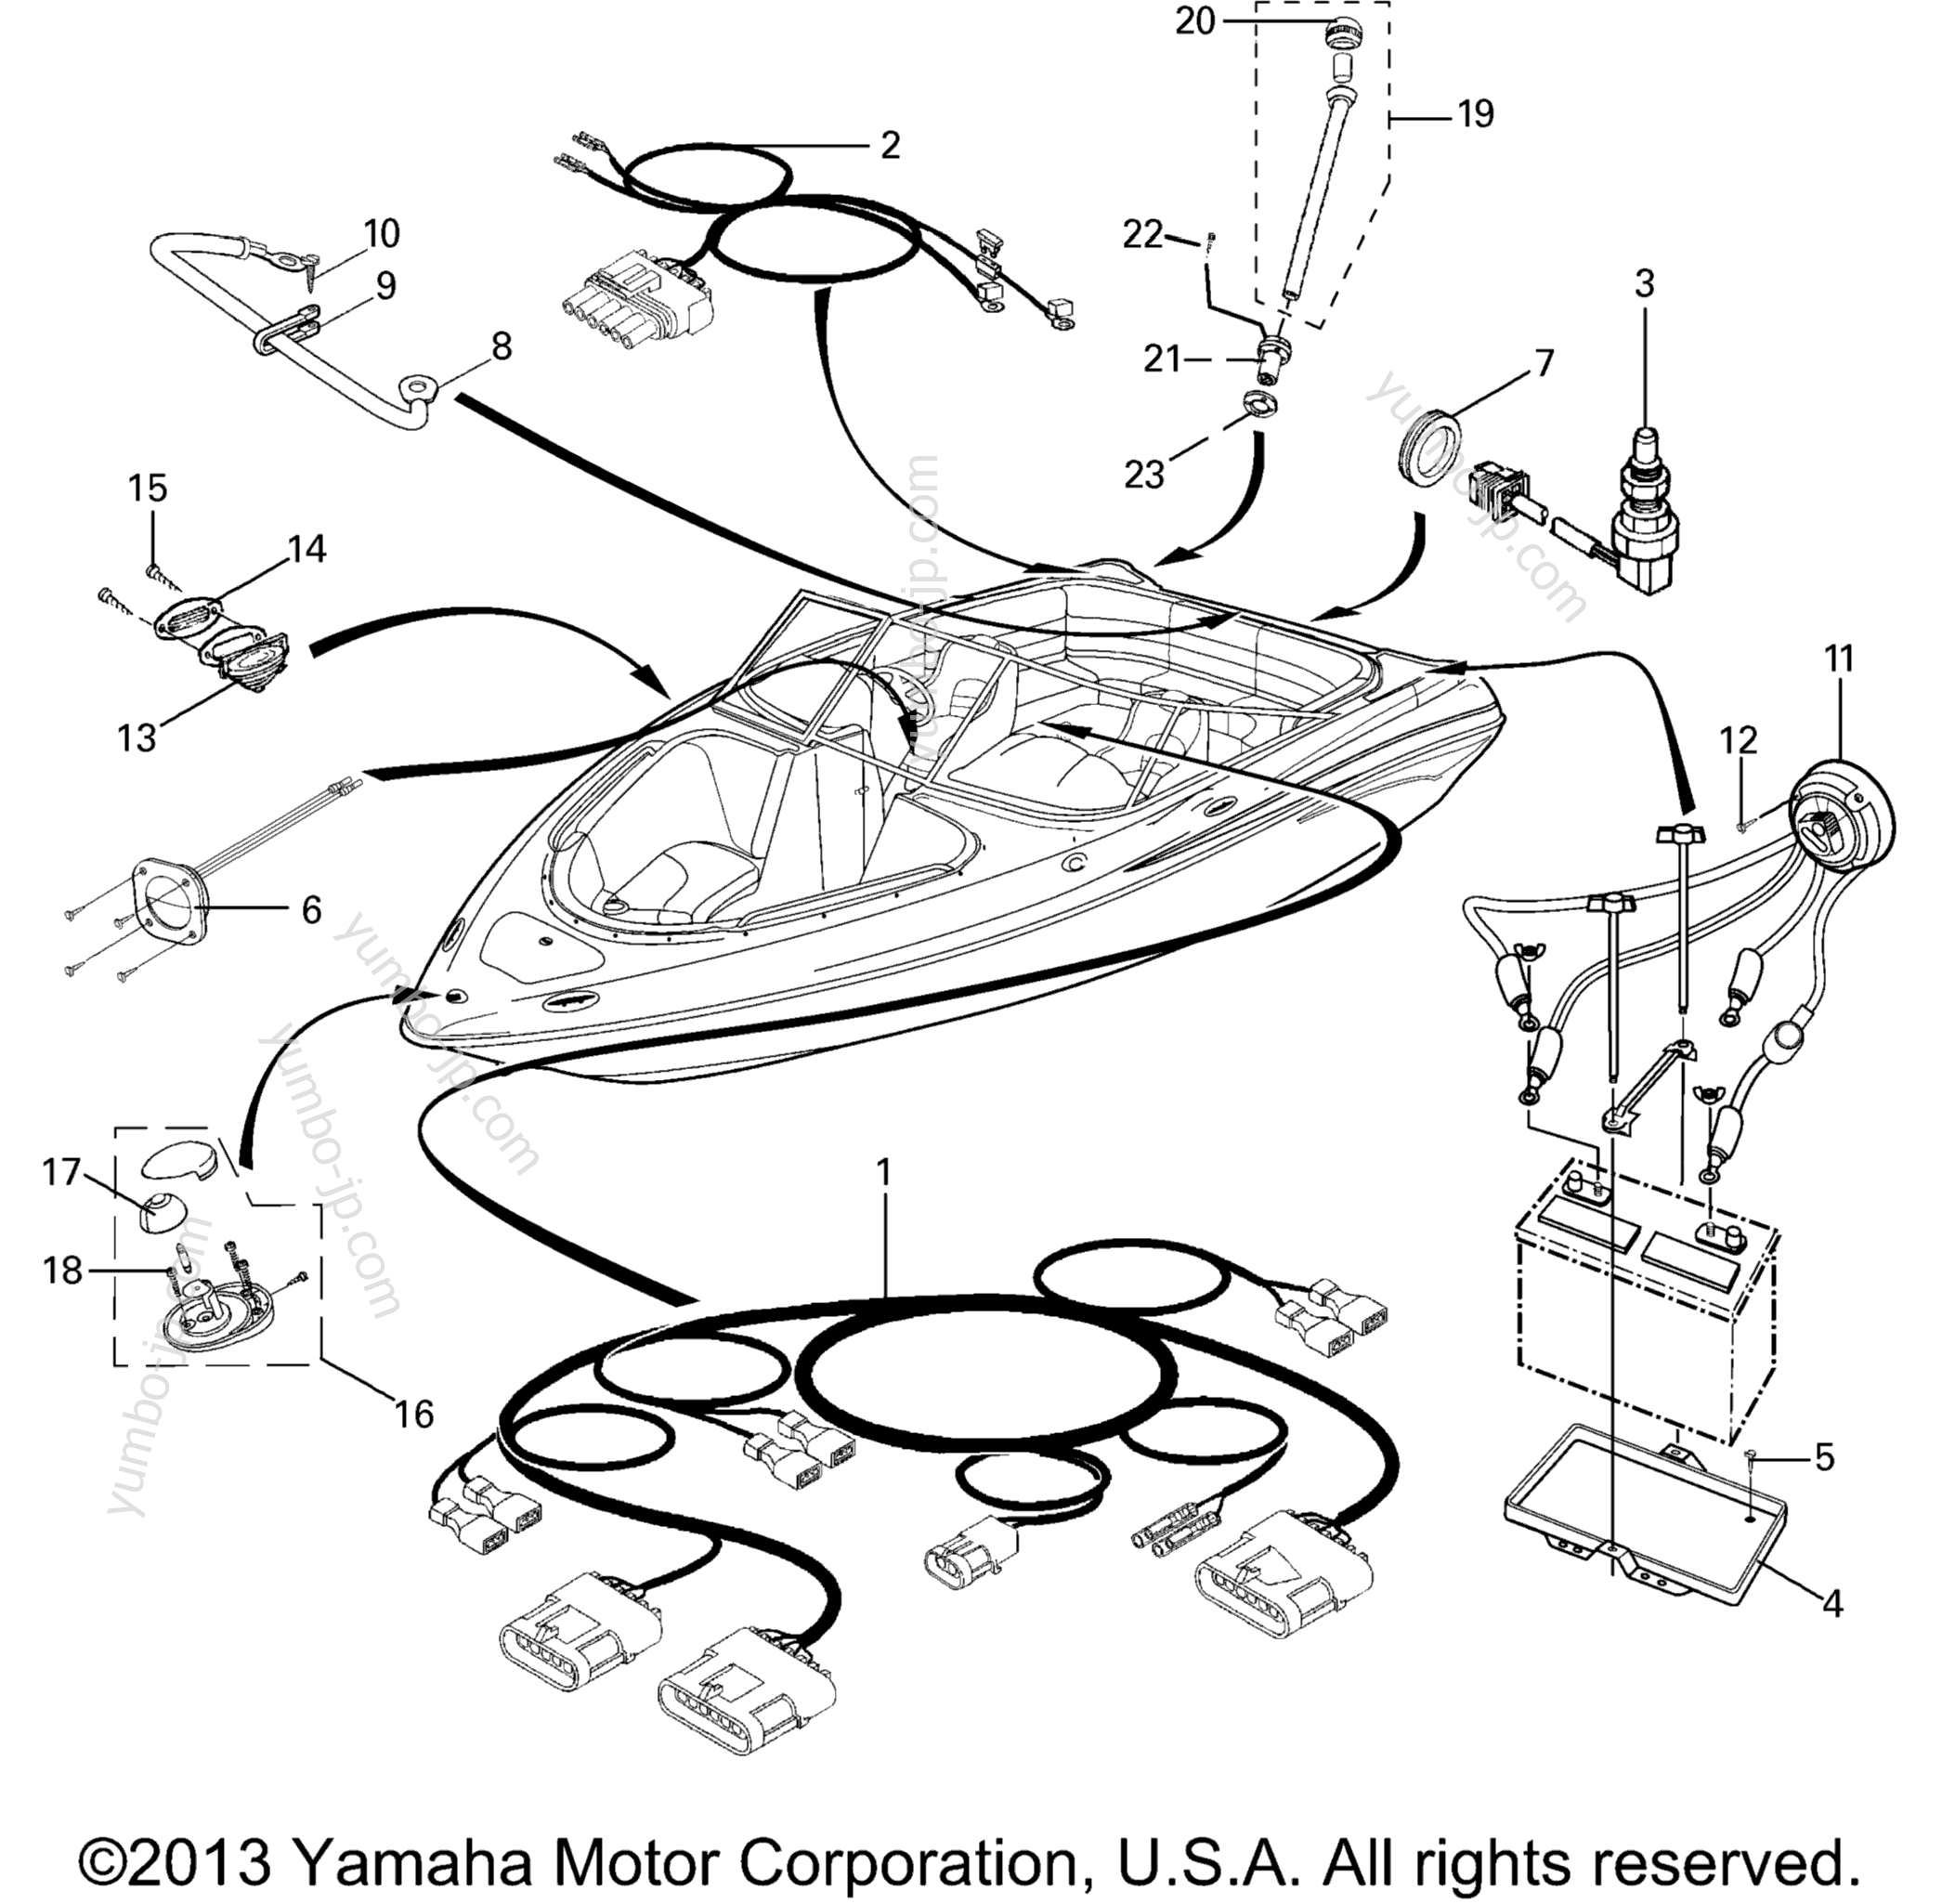 Electrical 3 for boats YAMAHA SR230 (Cali.) (SRT1000CC) CA 2004 year